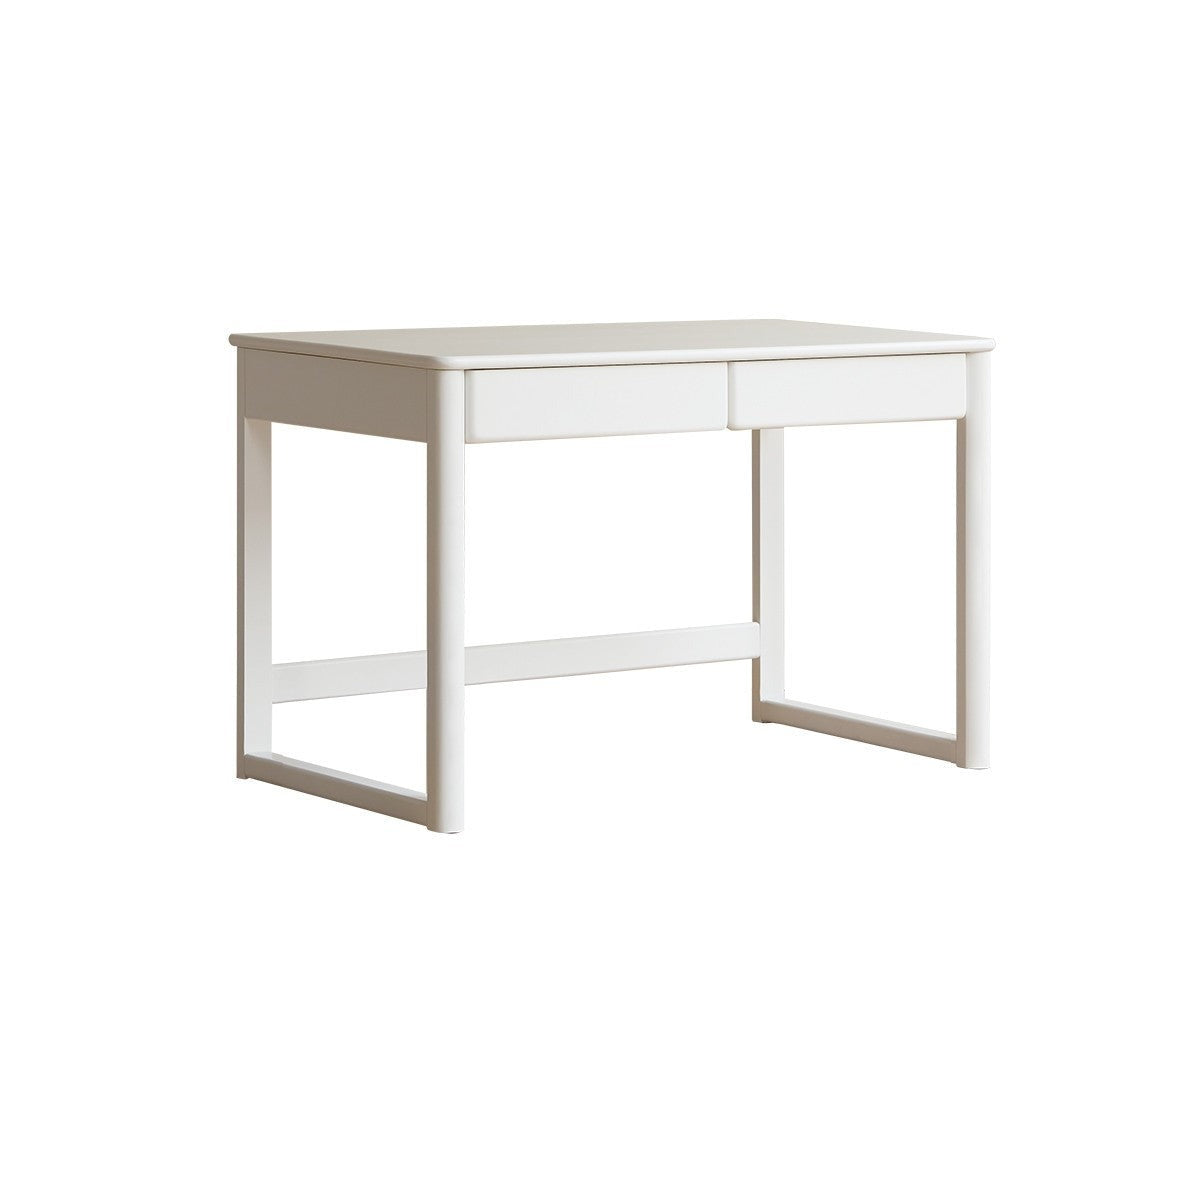 Poplar solid wood study table writing desk white cream"